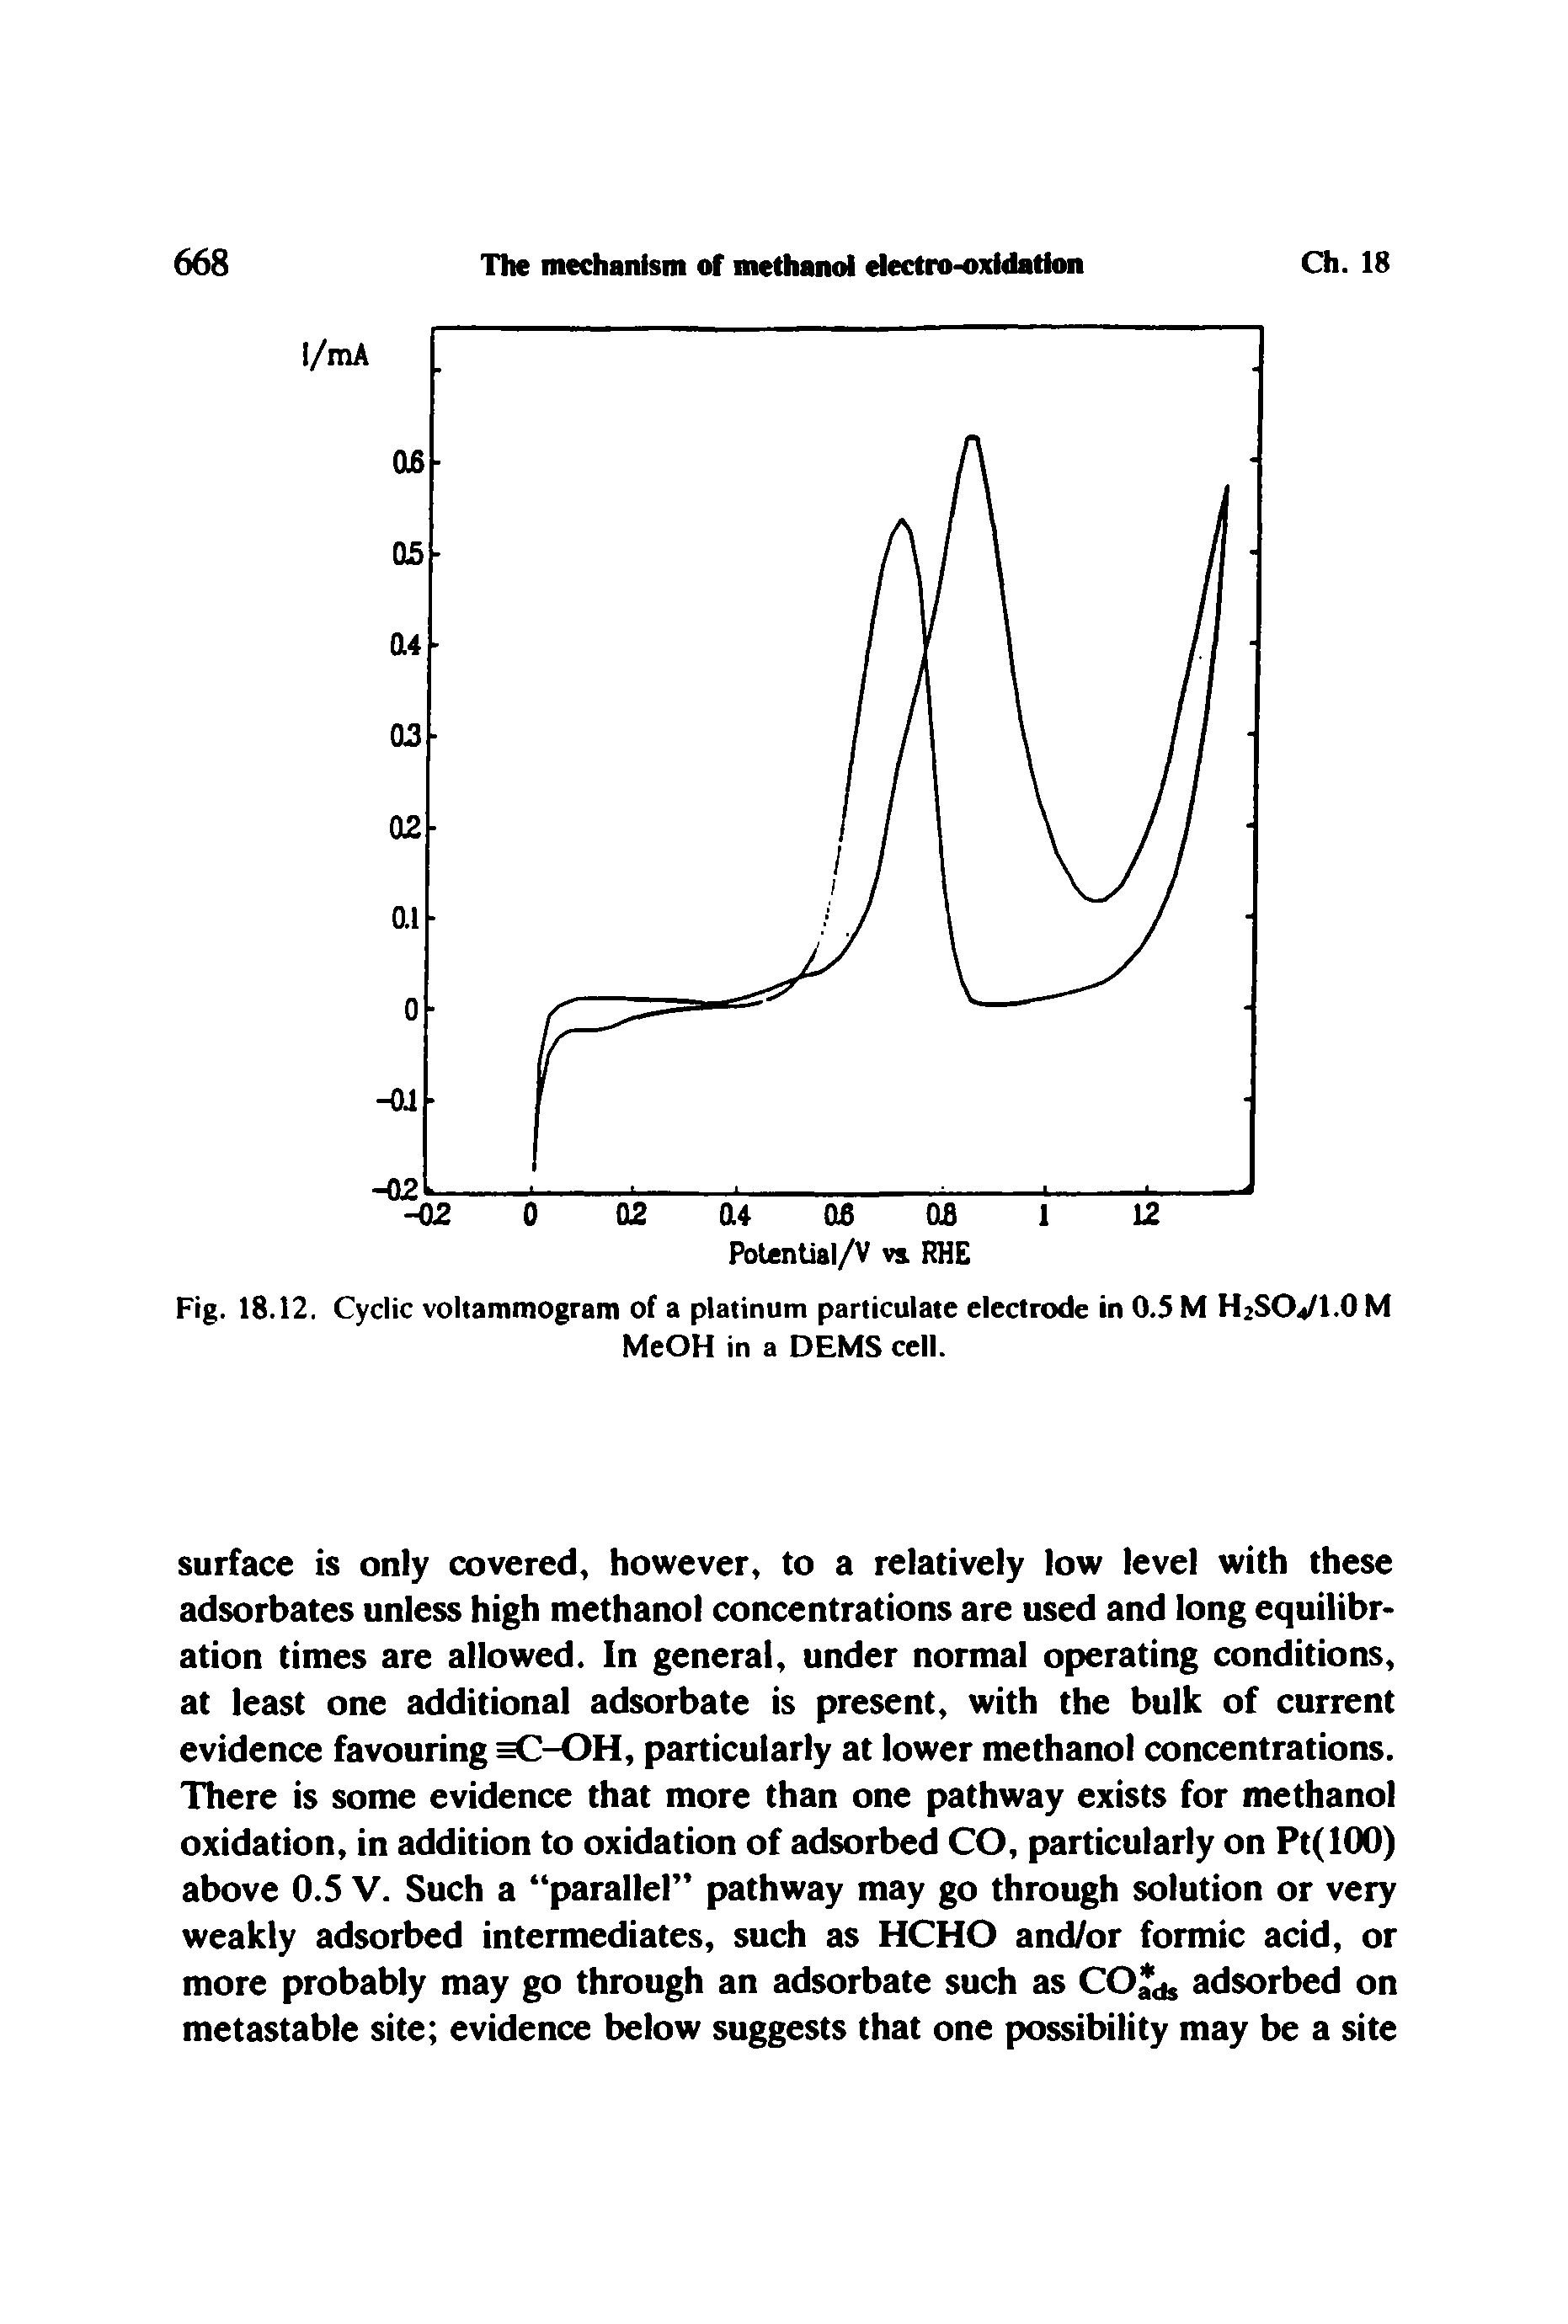 Fig. 18.12. Cyclic voltammogram of a platinum particulate electrode in 0.5 M H2SO4/I.O M...